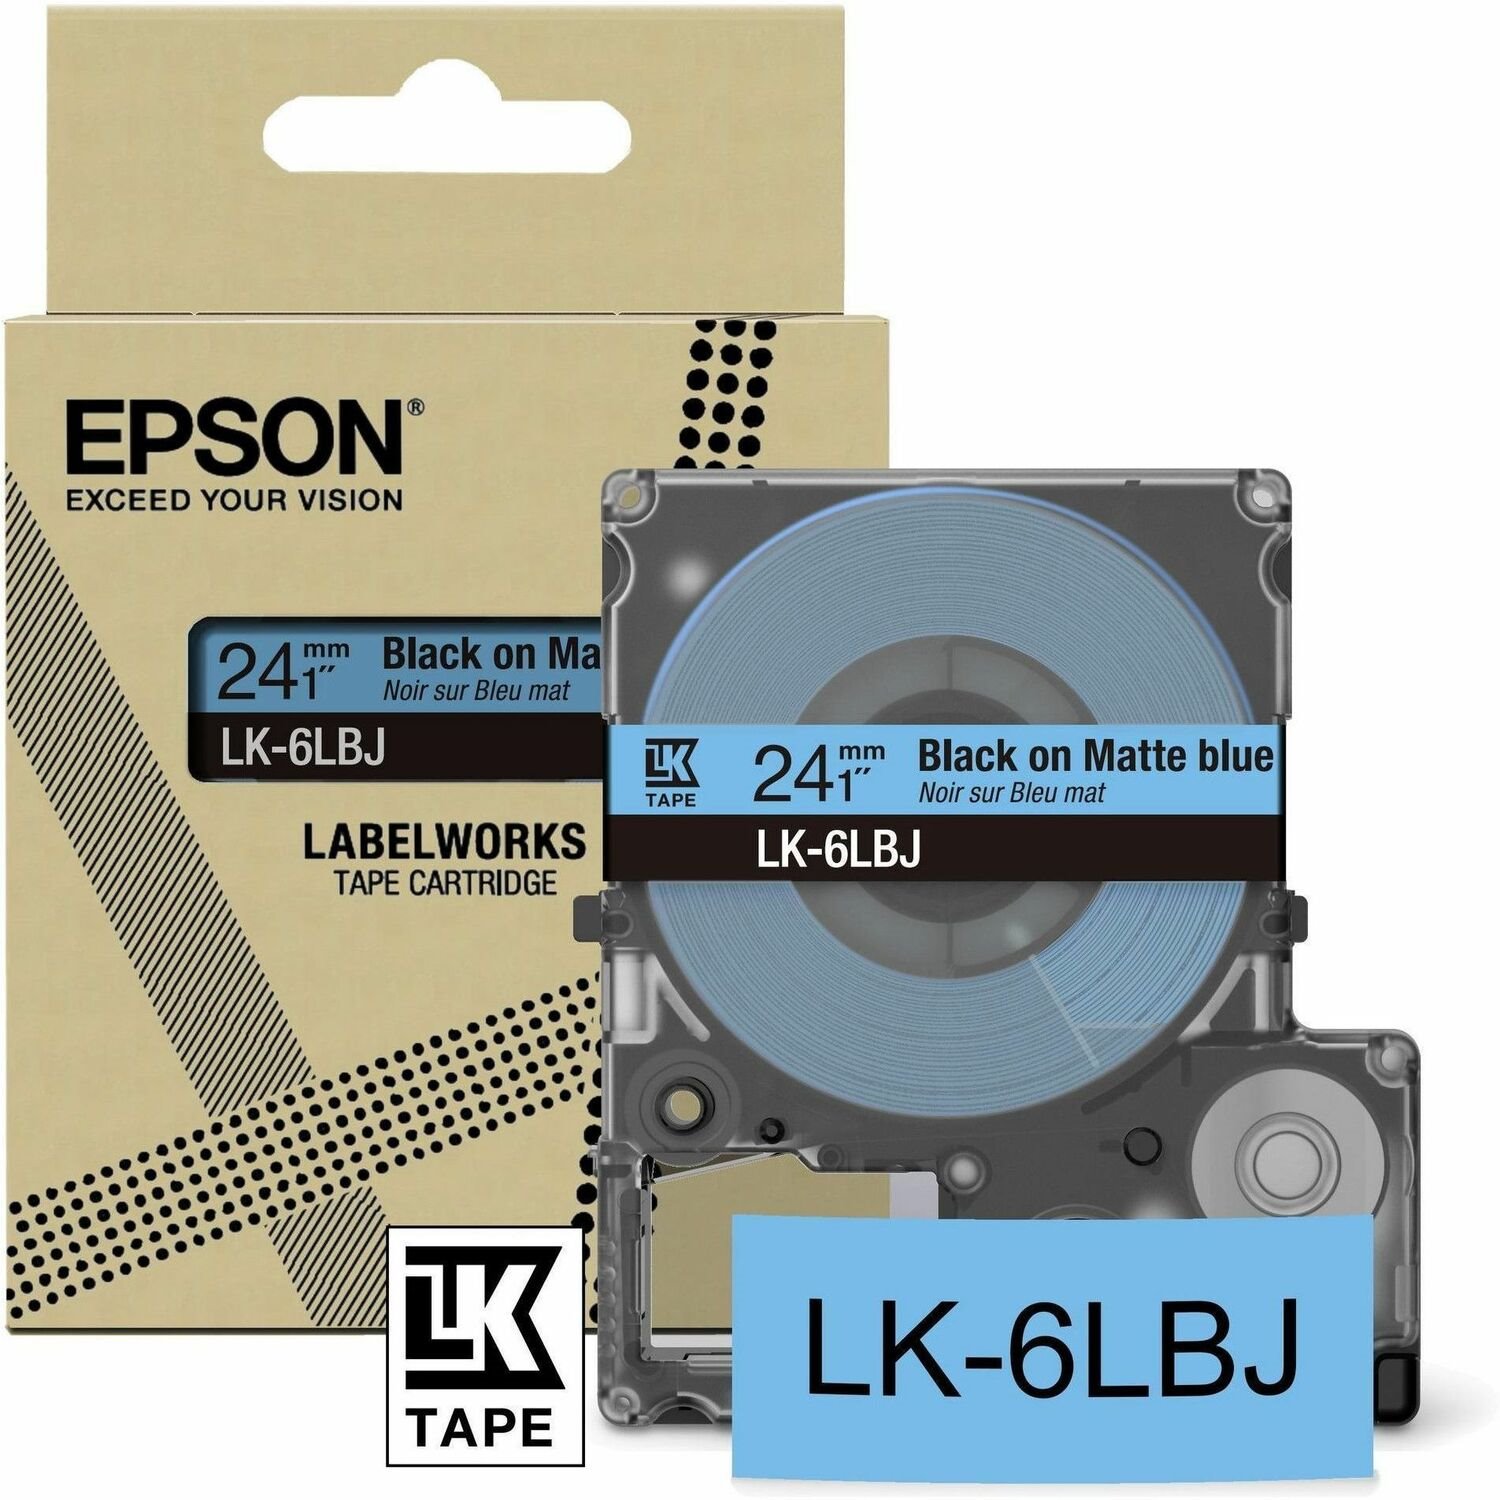 Epson LK-6LBJ Label Tape